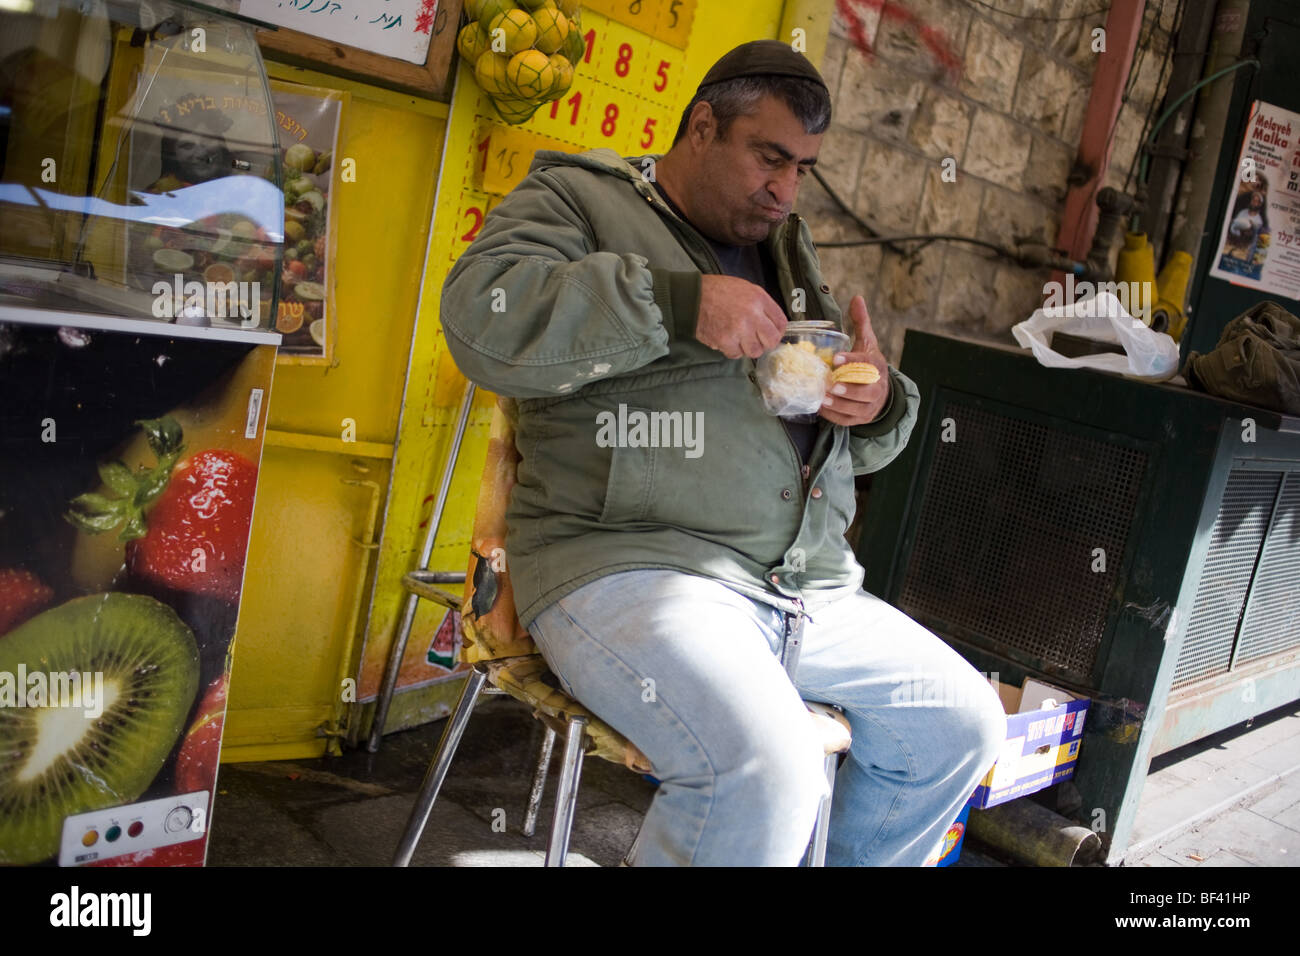 A Man Having a Snack at Machane Yehuda Market in Jerusalem Israel Stock Photo